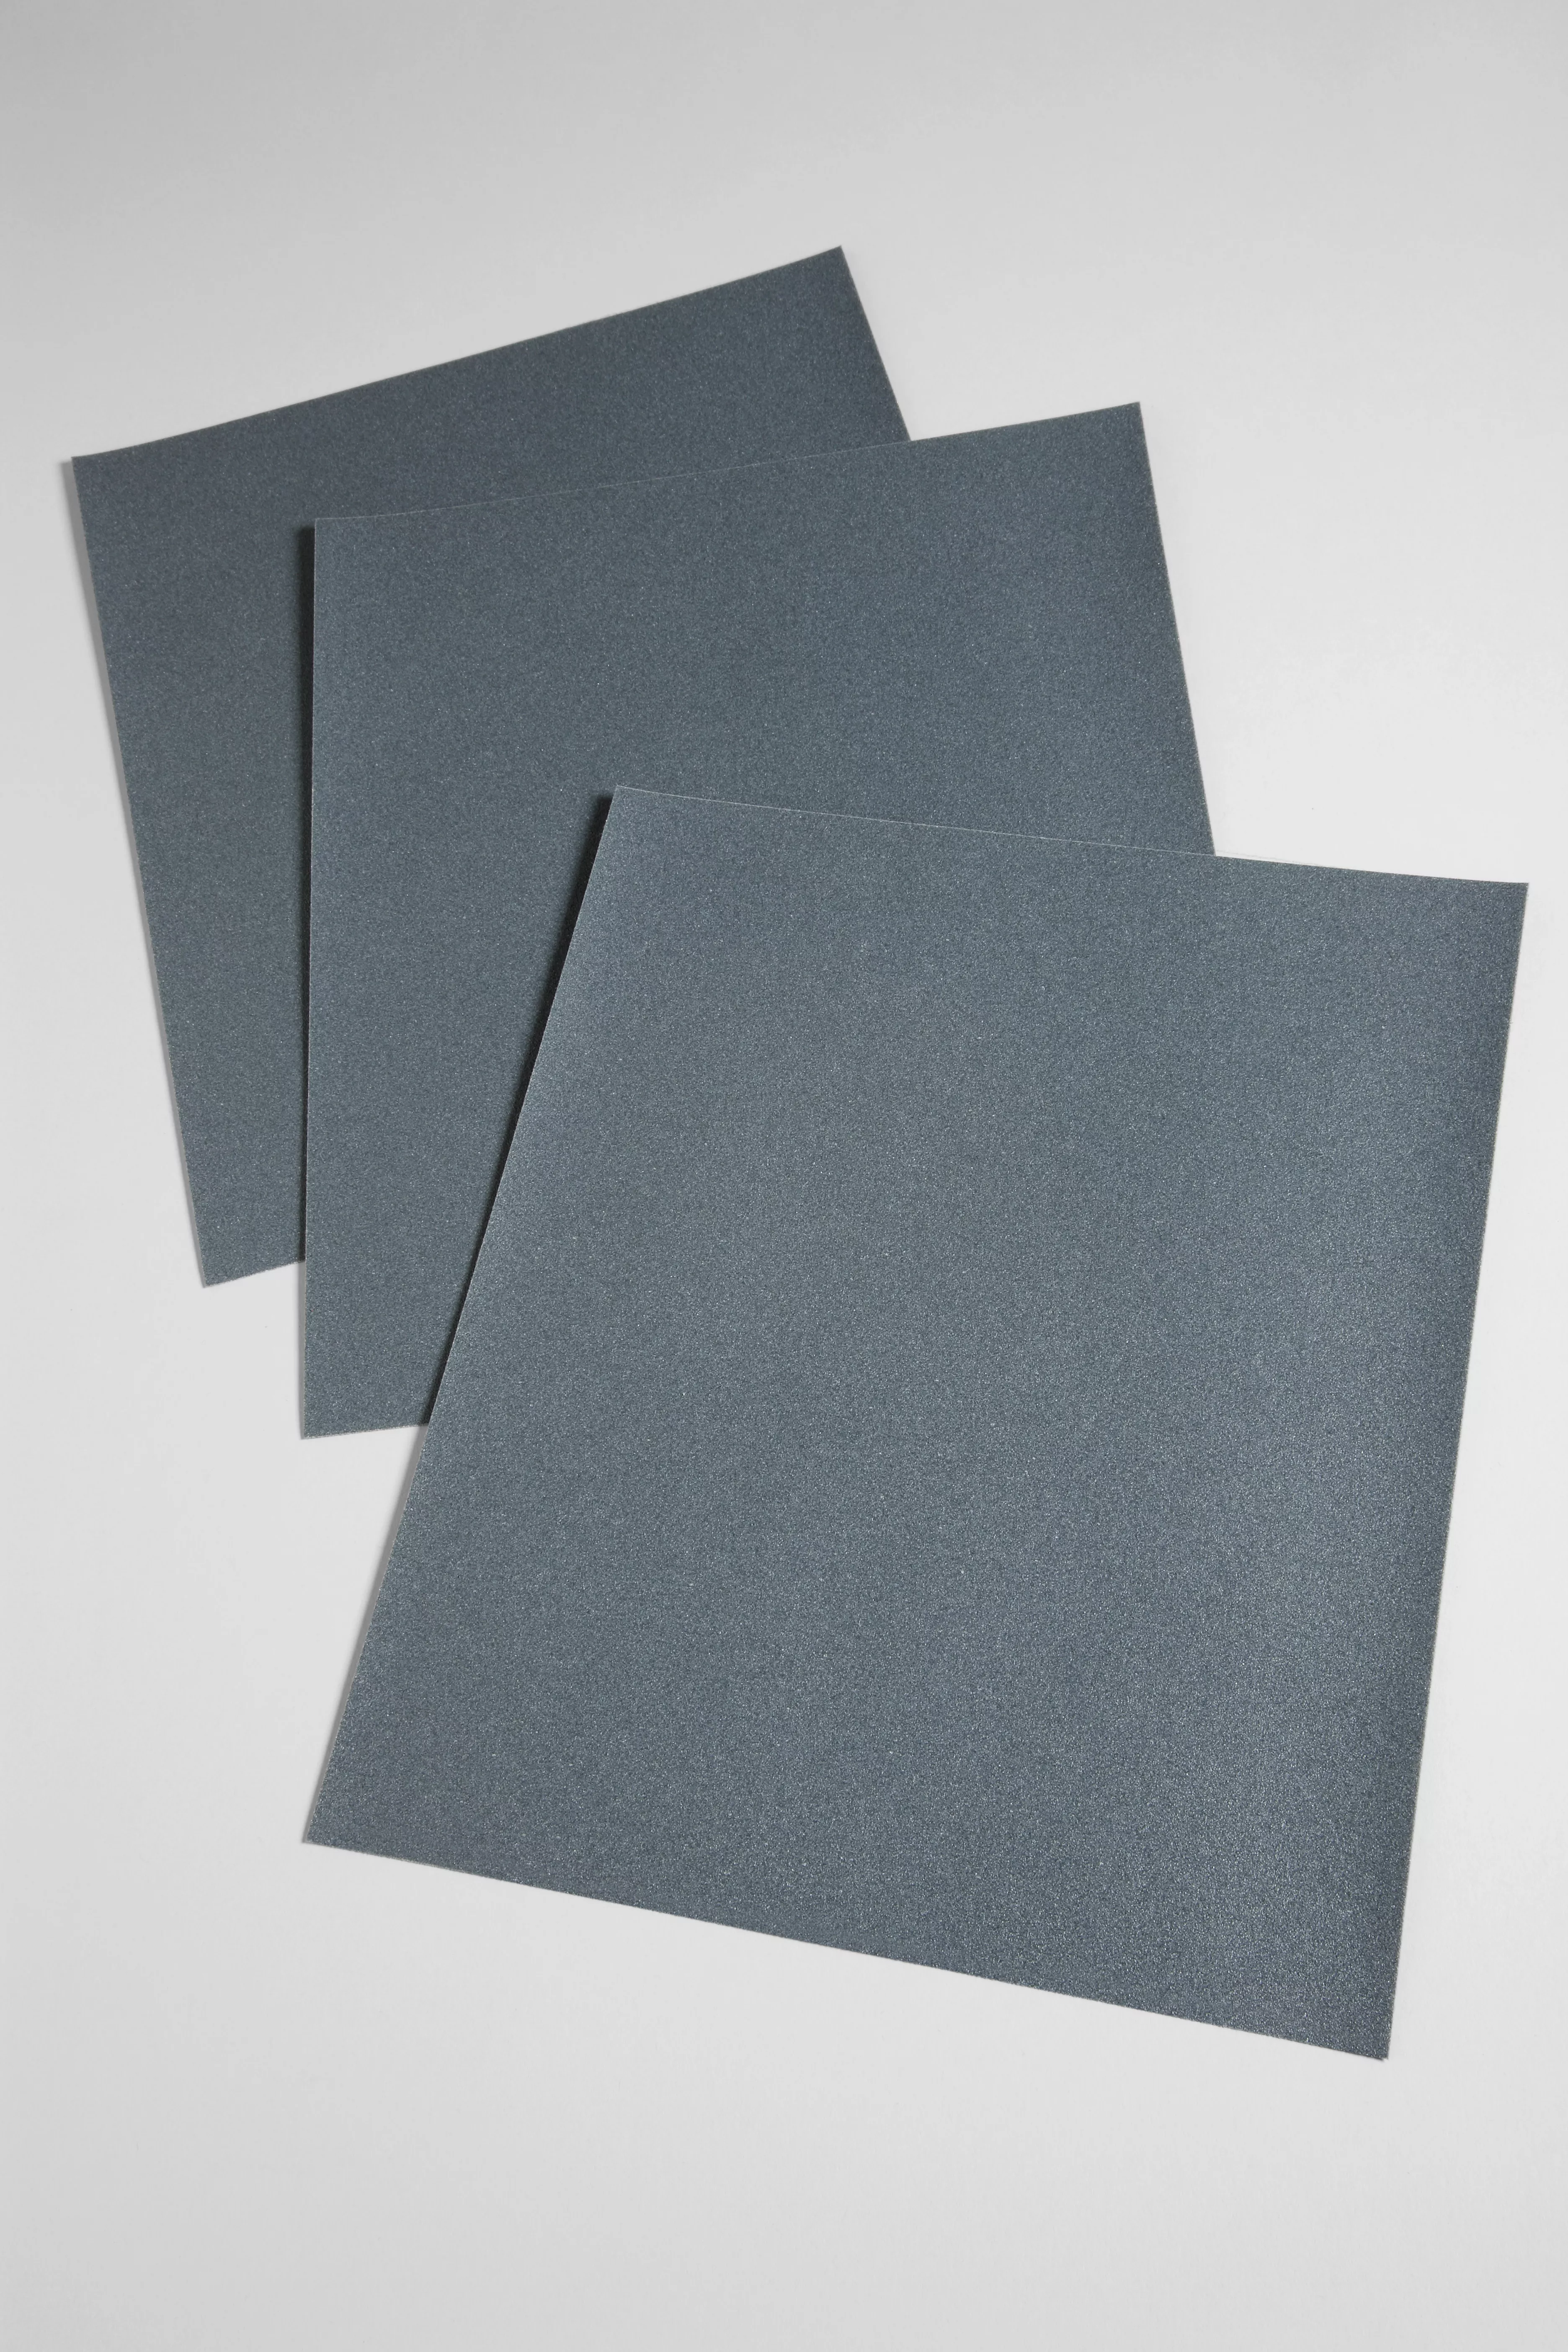 3M™ Wetordry™ Paper Sheet 431Q, 150 C-weight, 9 in x 11 in, 50/Carton,
250 ea/Case